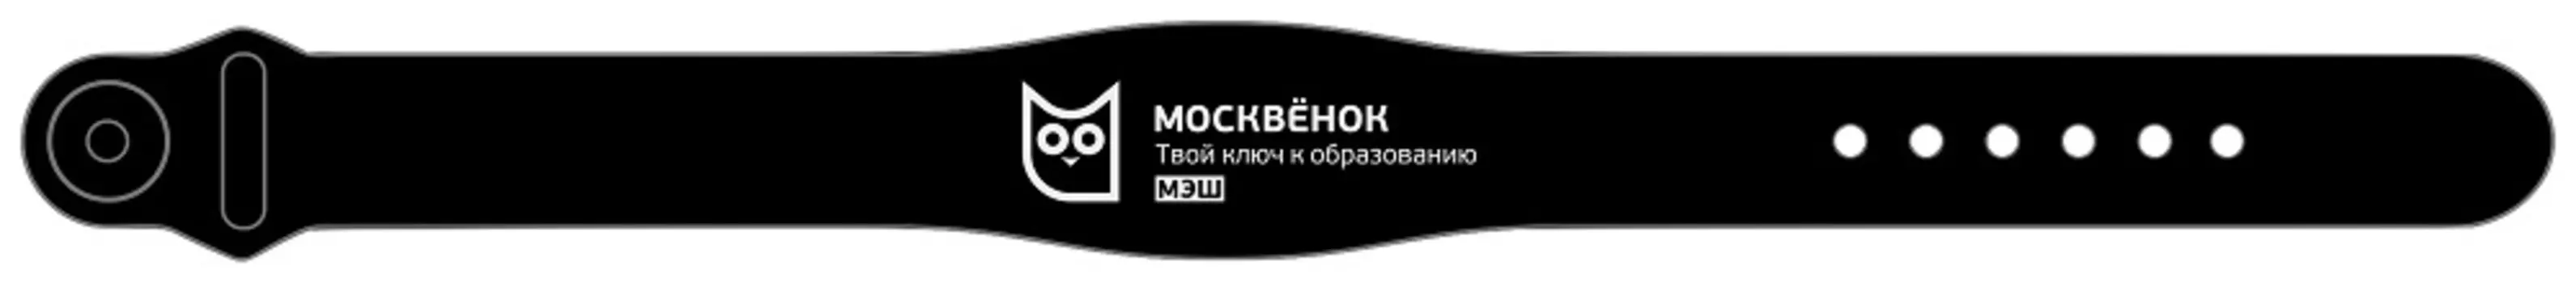 Браслет RFID Москвенок